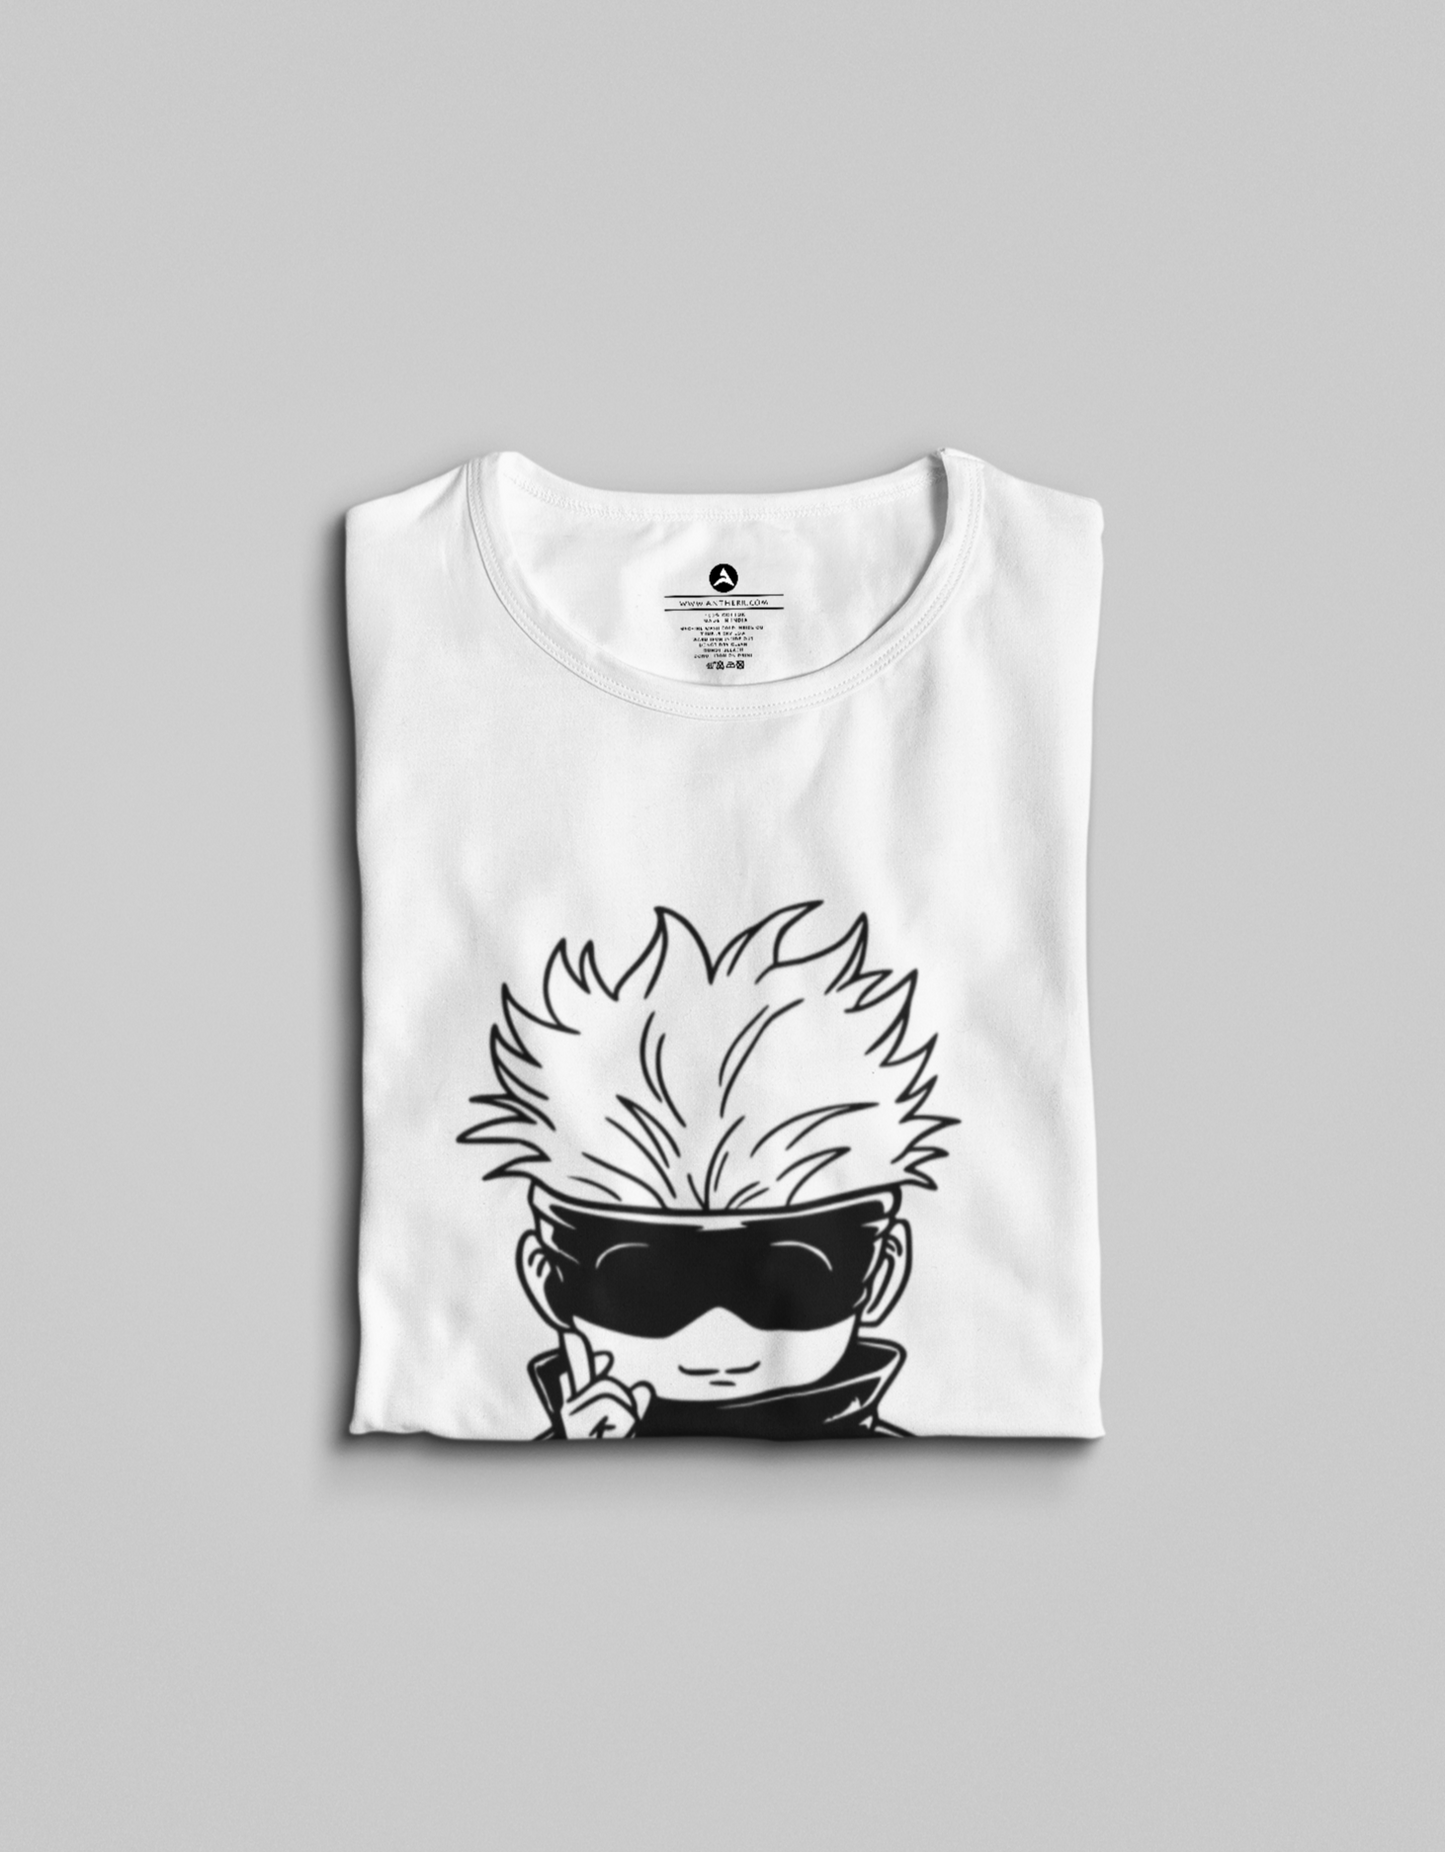 Round Anime Chibi Gojo Satoru White T-shirt, Half Sleeves, Printed